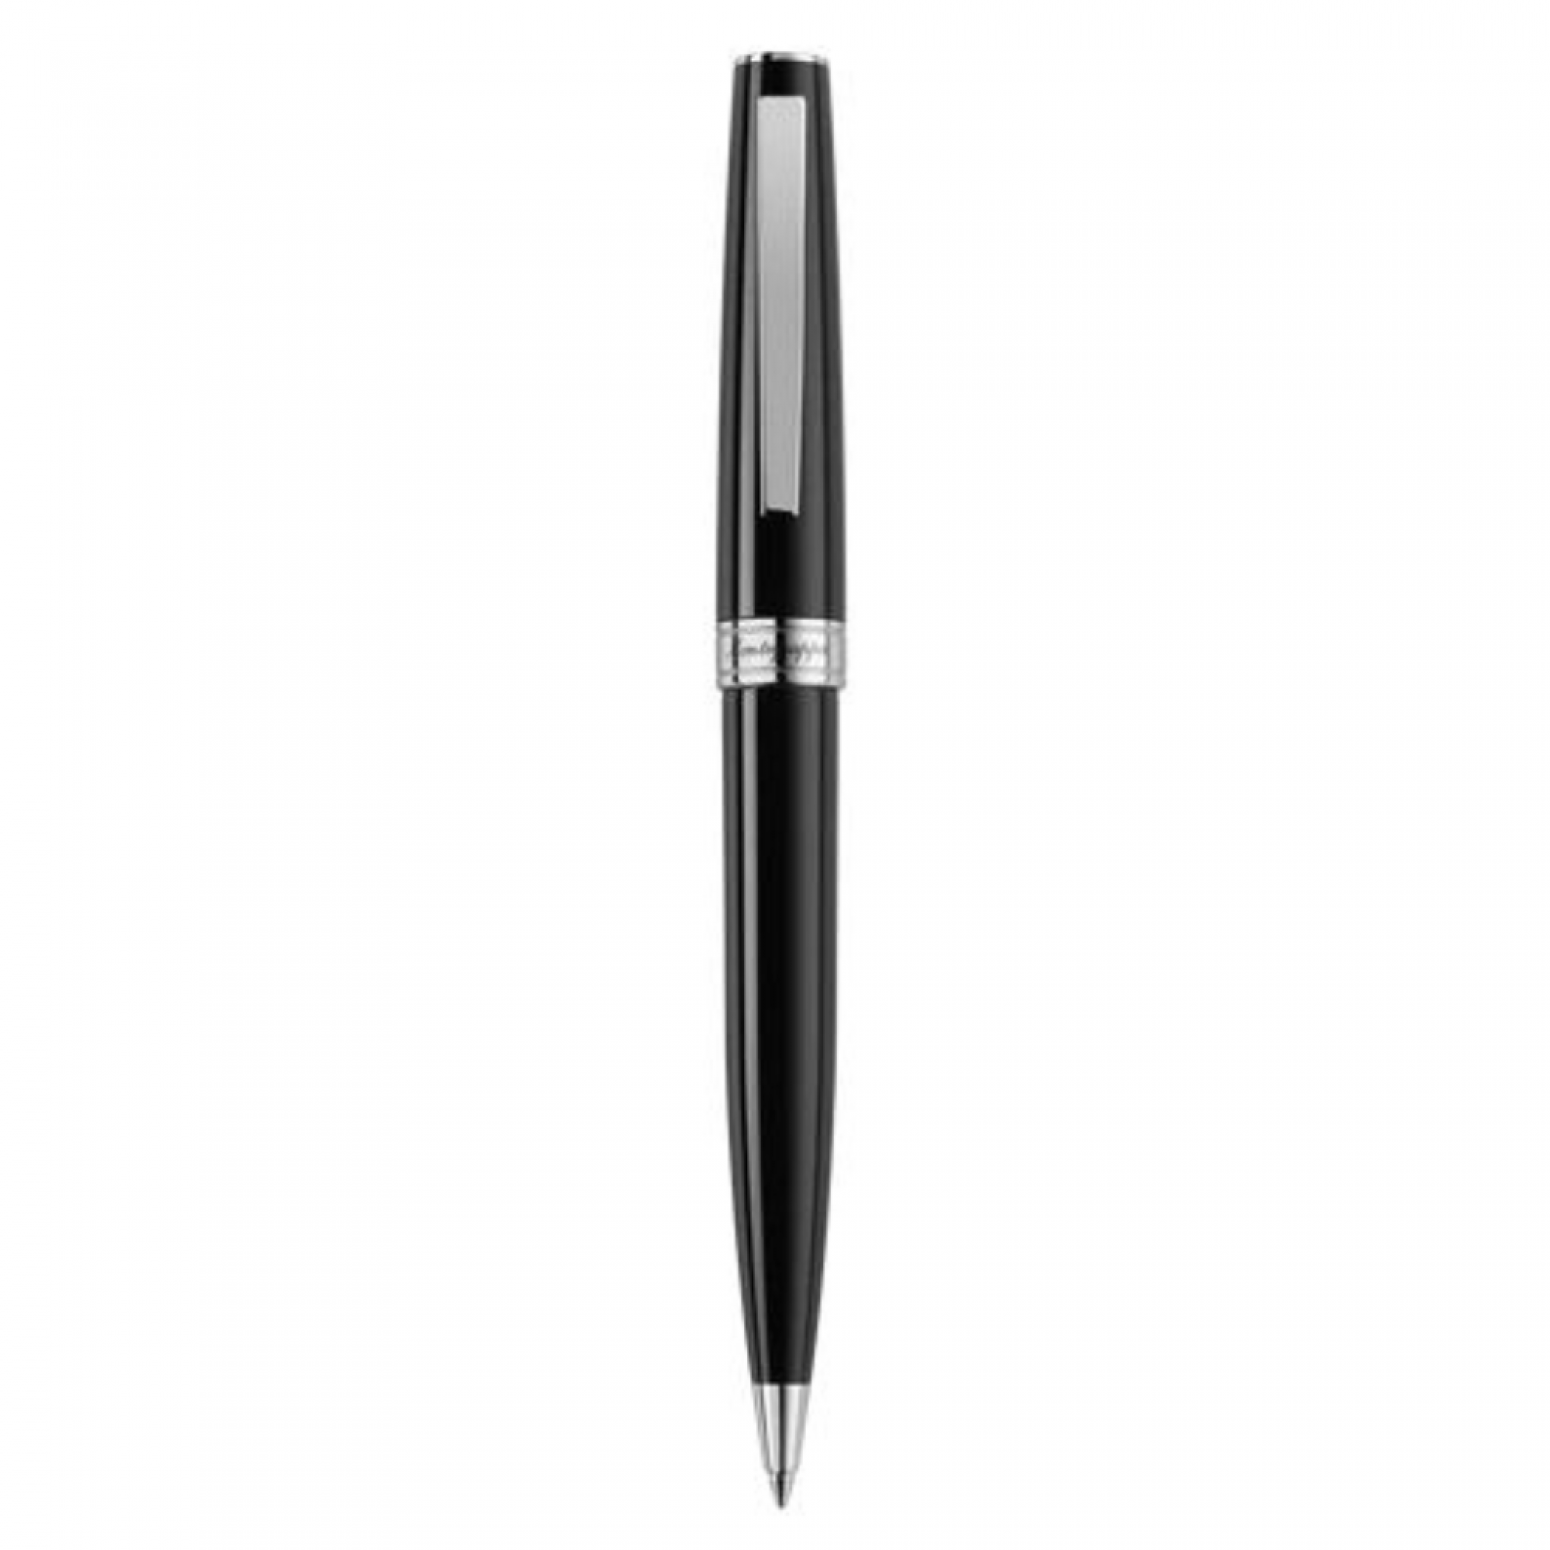 Montegrappa Ballpoint στυλό, Armonia Black ISA1RBAC, ac1577 ΔΩΡΑ Κοσμηματα - chrilia.gr